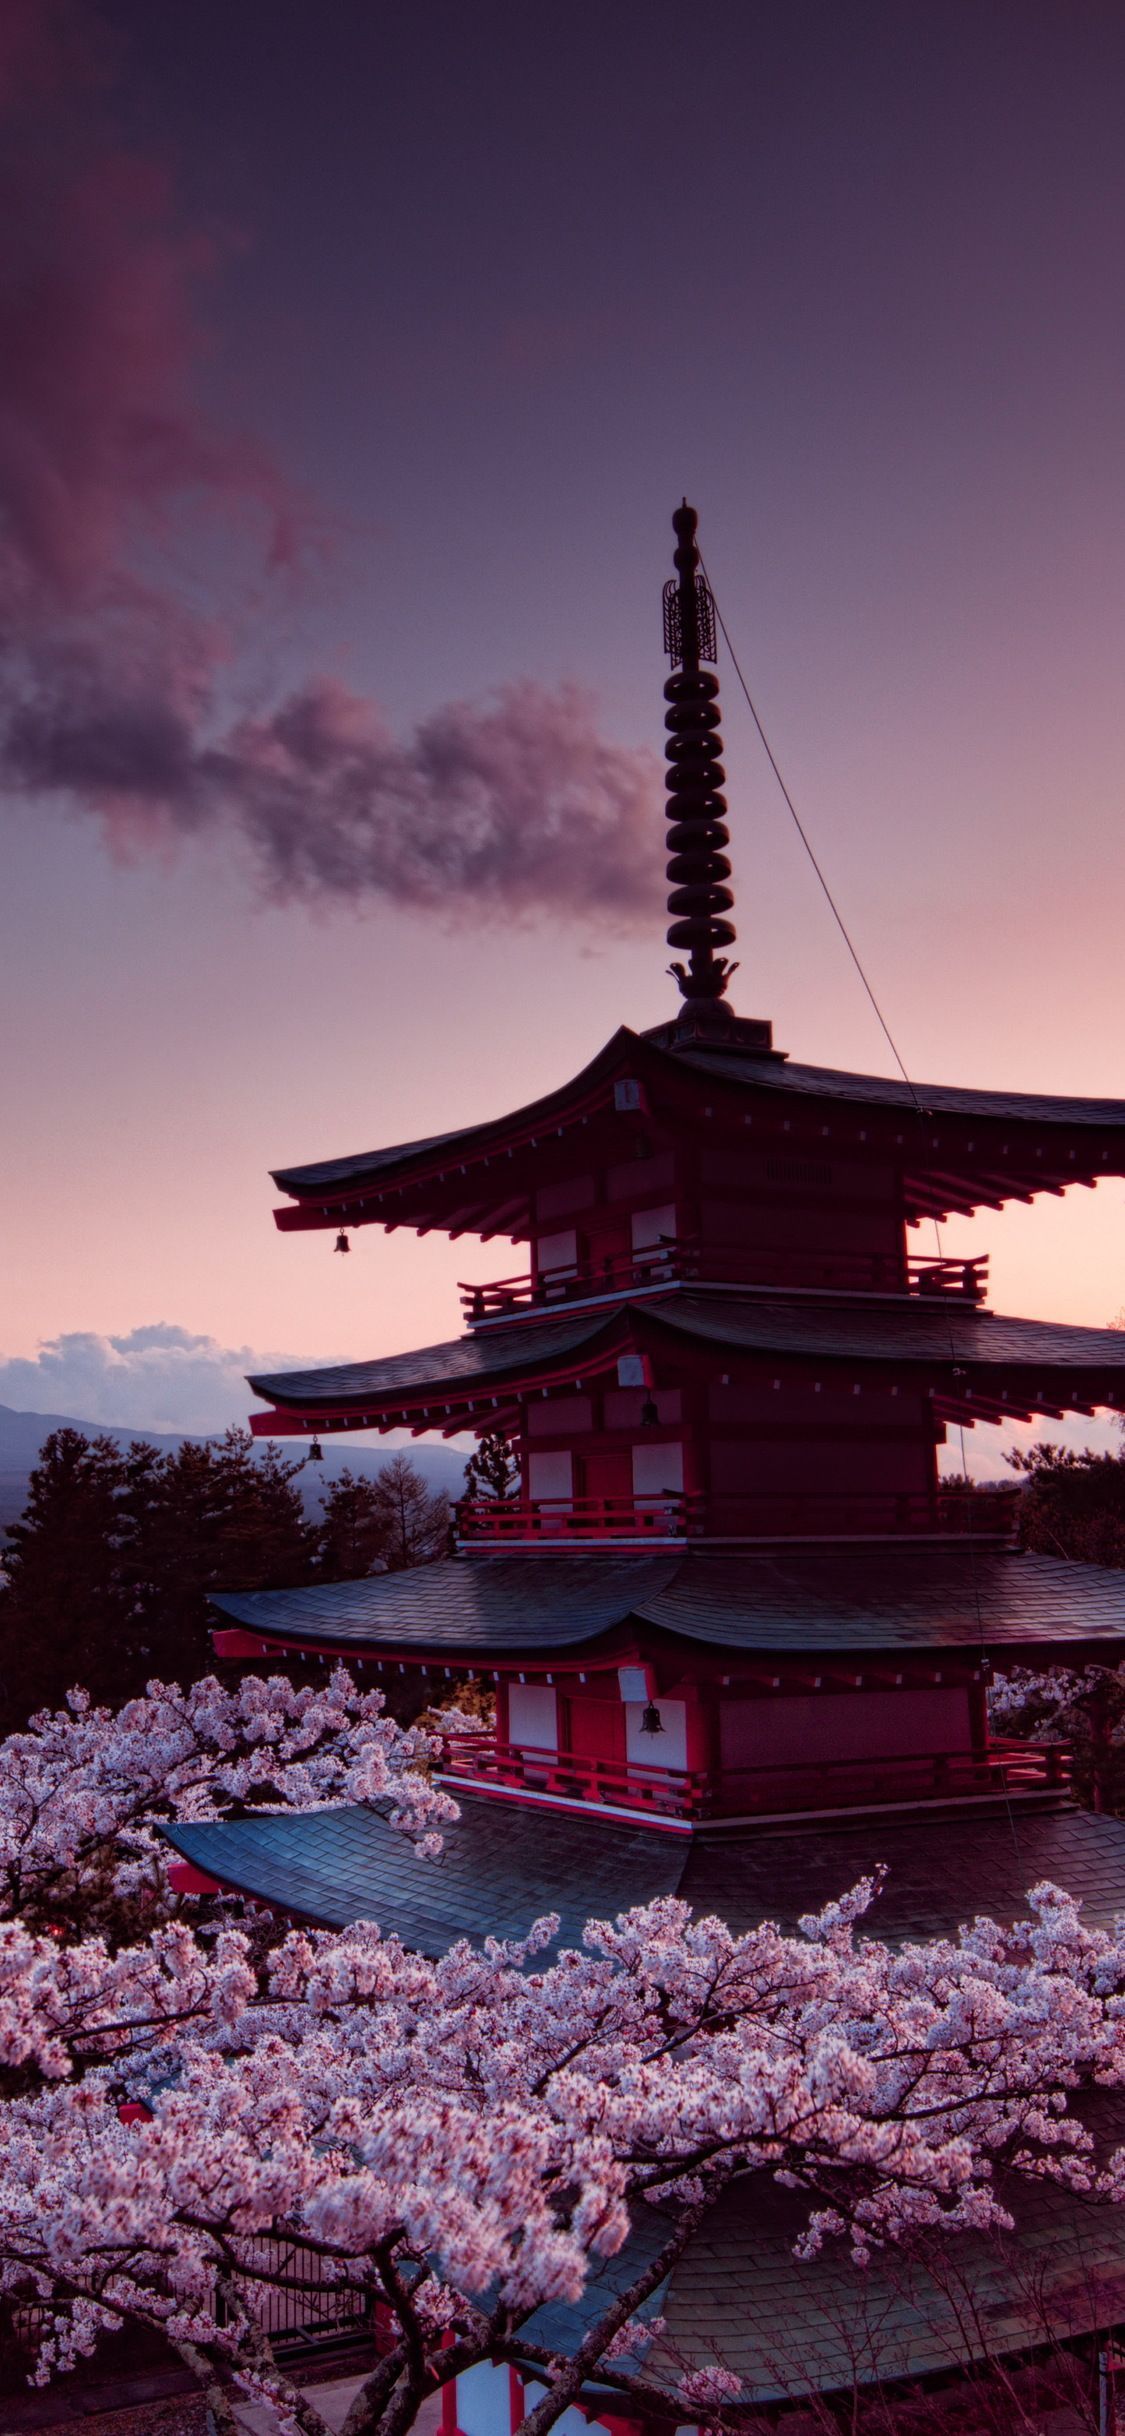 1125x2436 Churei Tower Mount Fuji In Japan 8k iPhone X